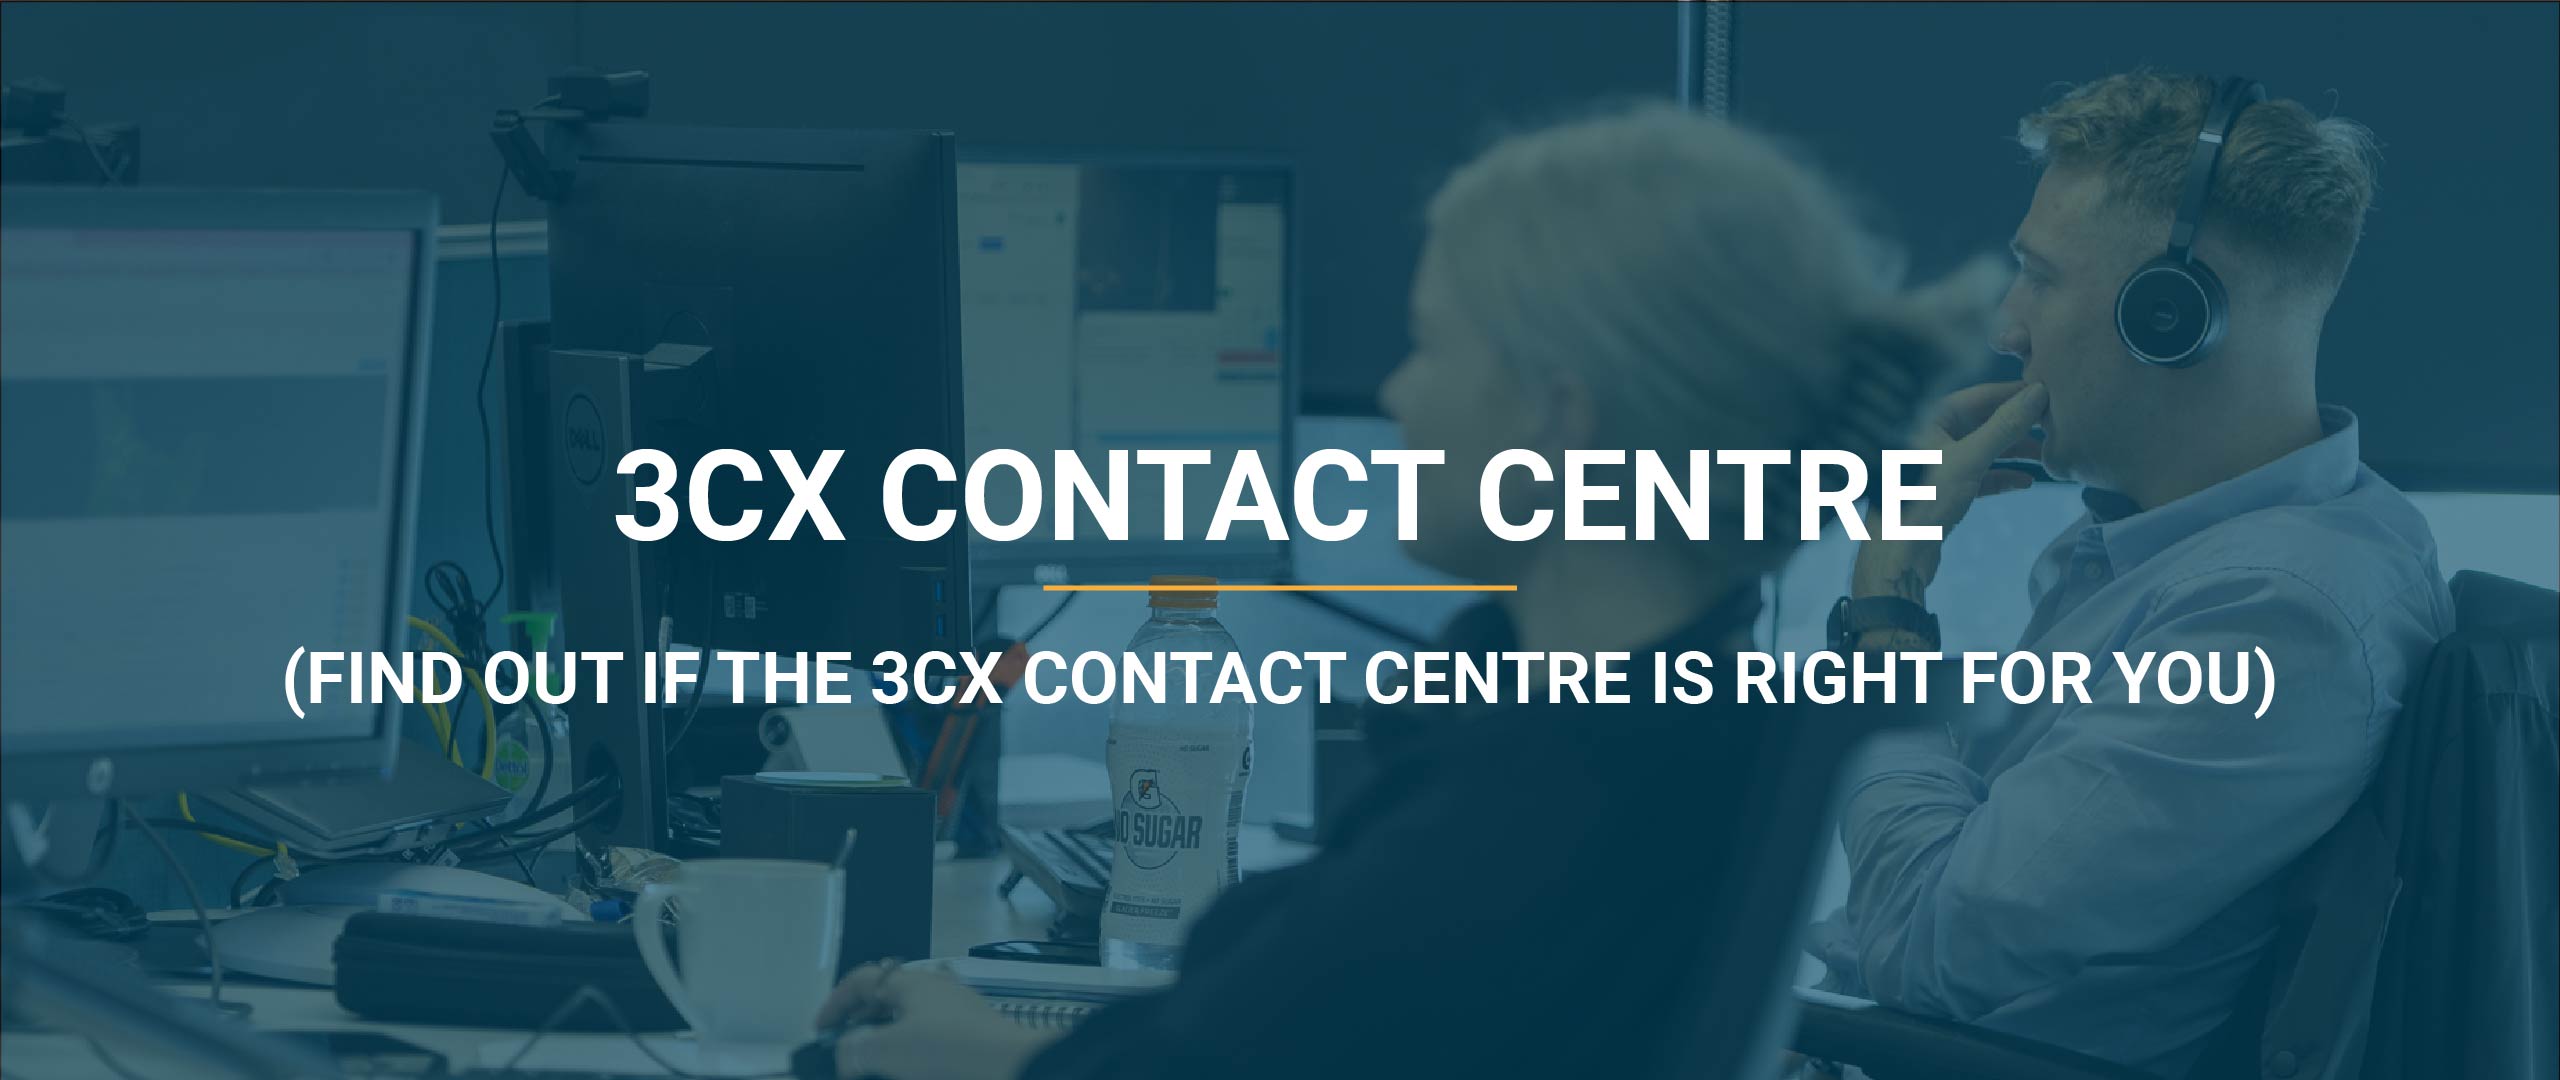 3cx contact centre